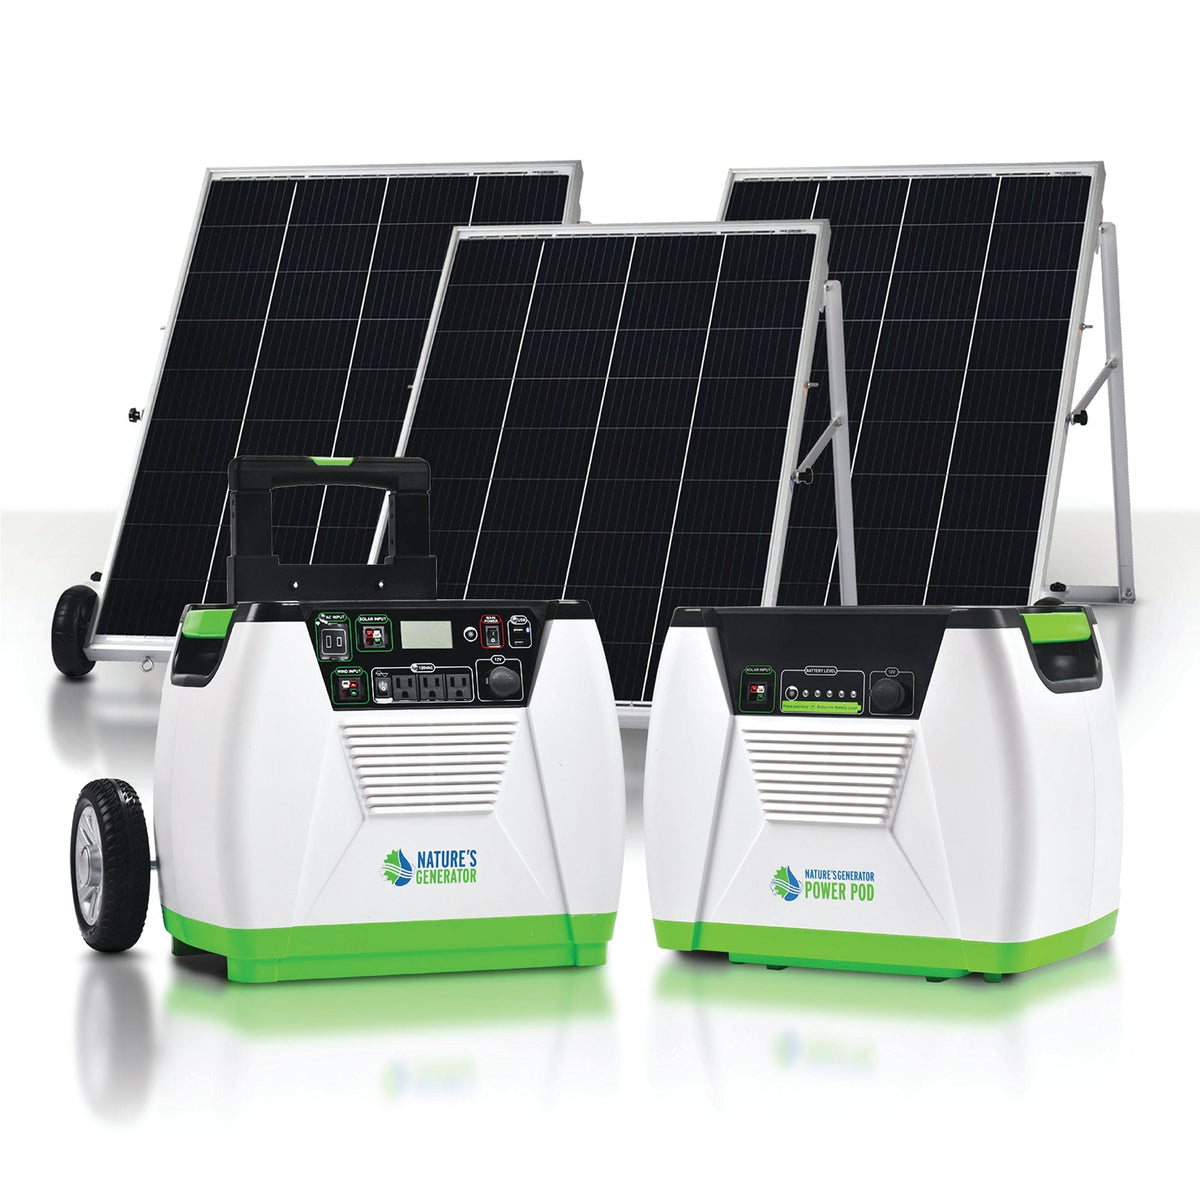 Nature's Generator 1800W Solar & Wind Powered Generator - PLATINUM System